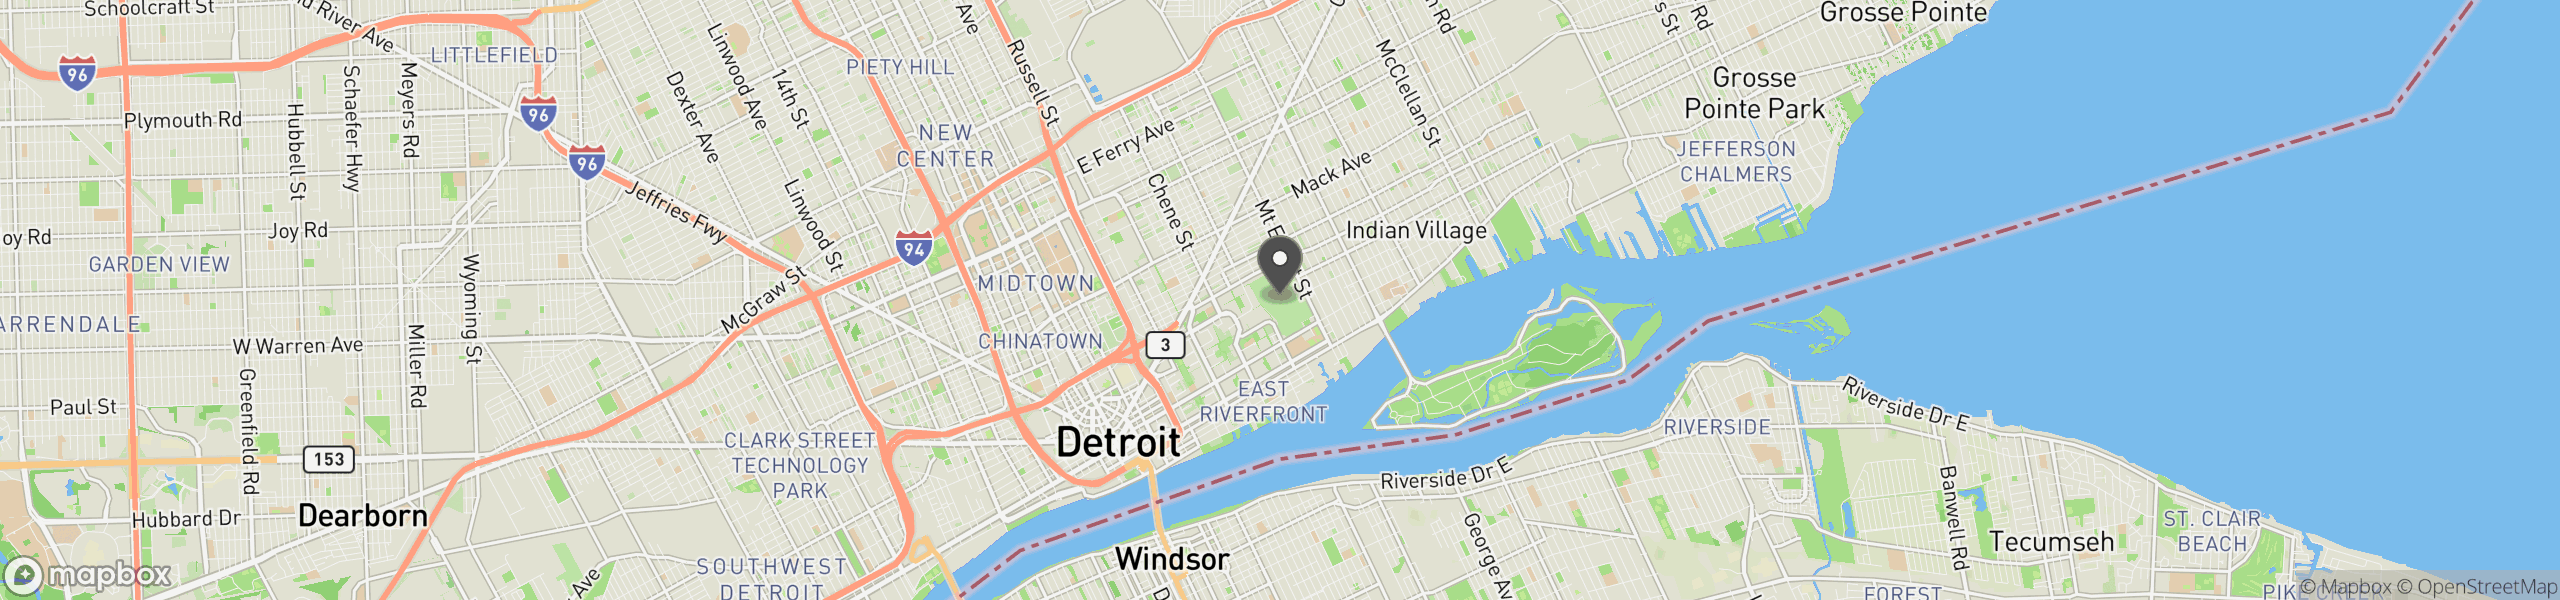 Detroit, MI 48207